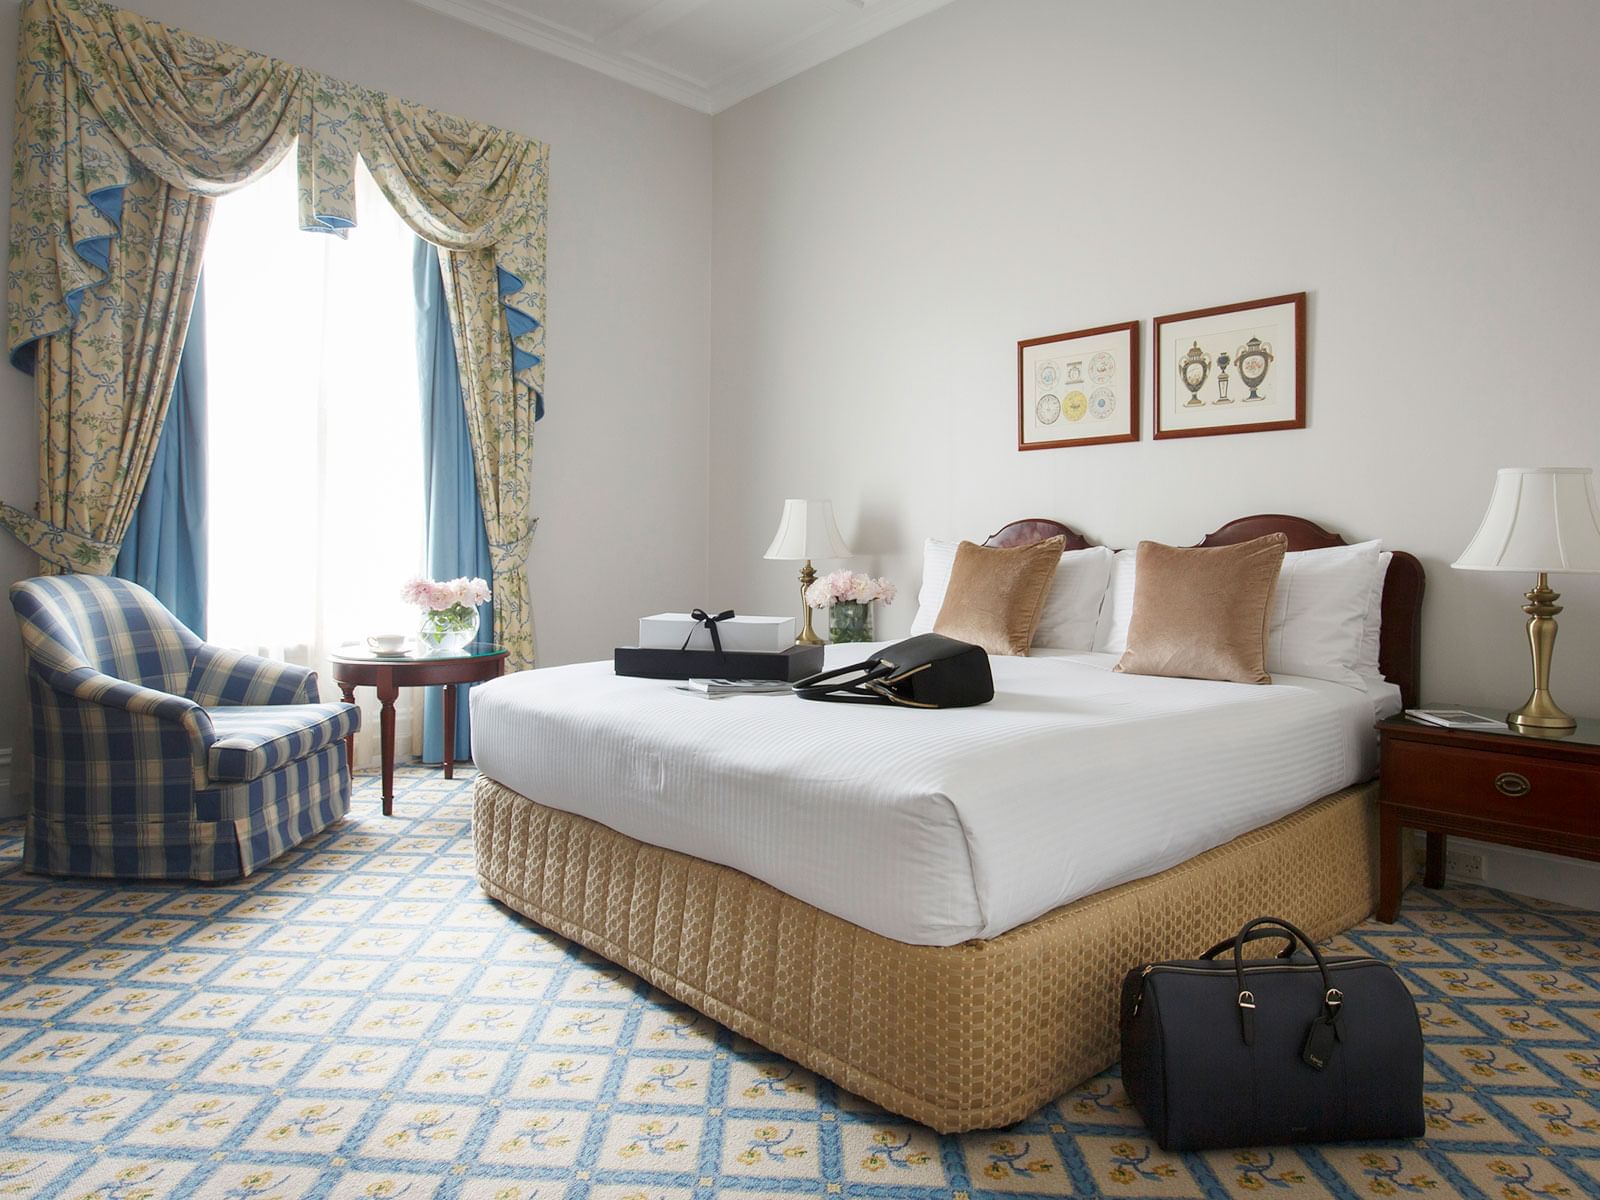 Superior Room at The Hotel Windsor Melbourne